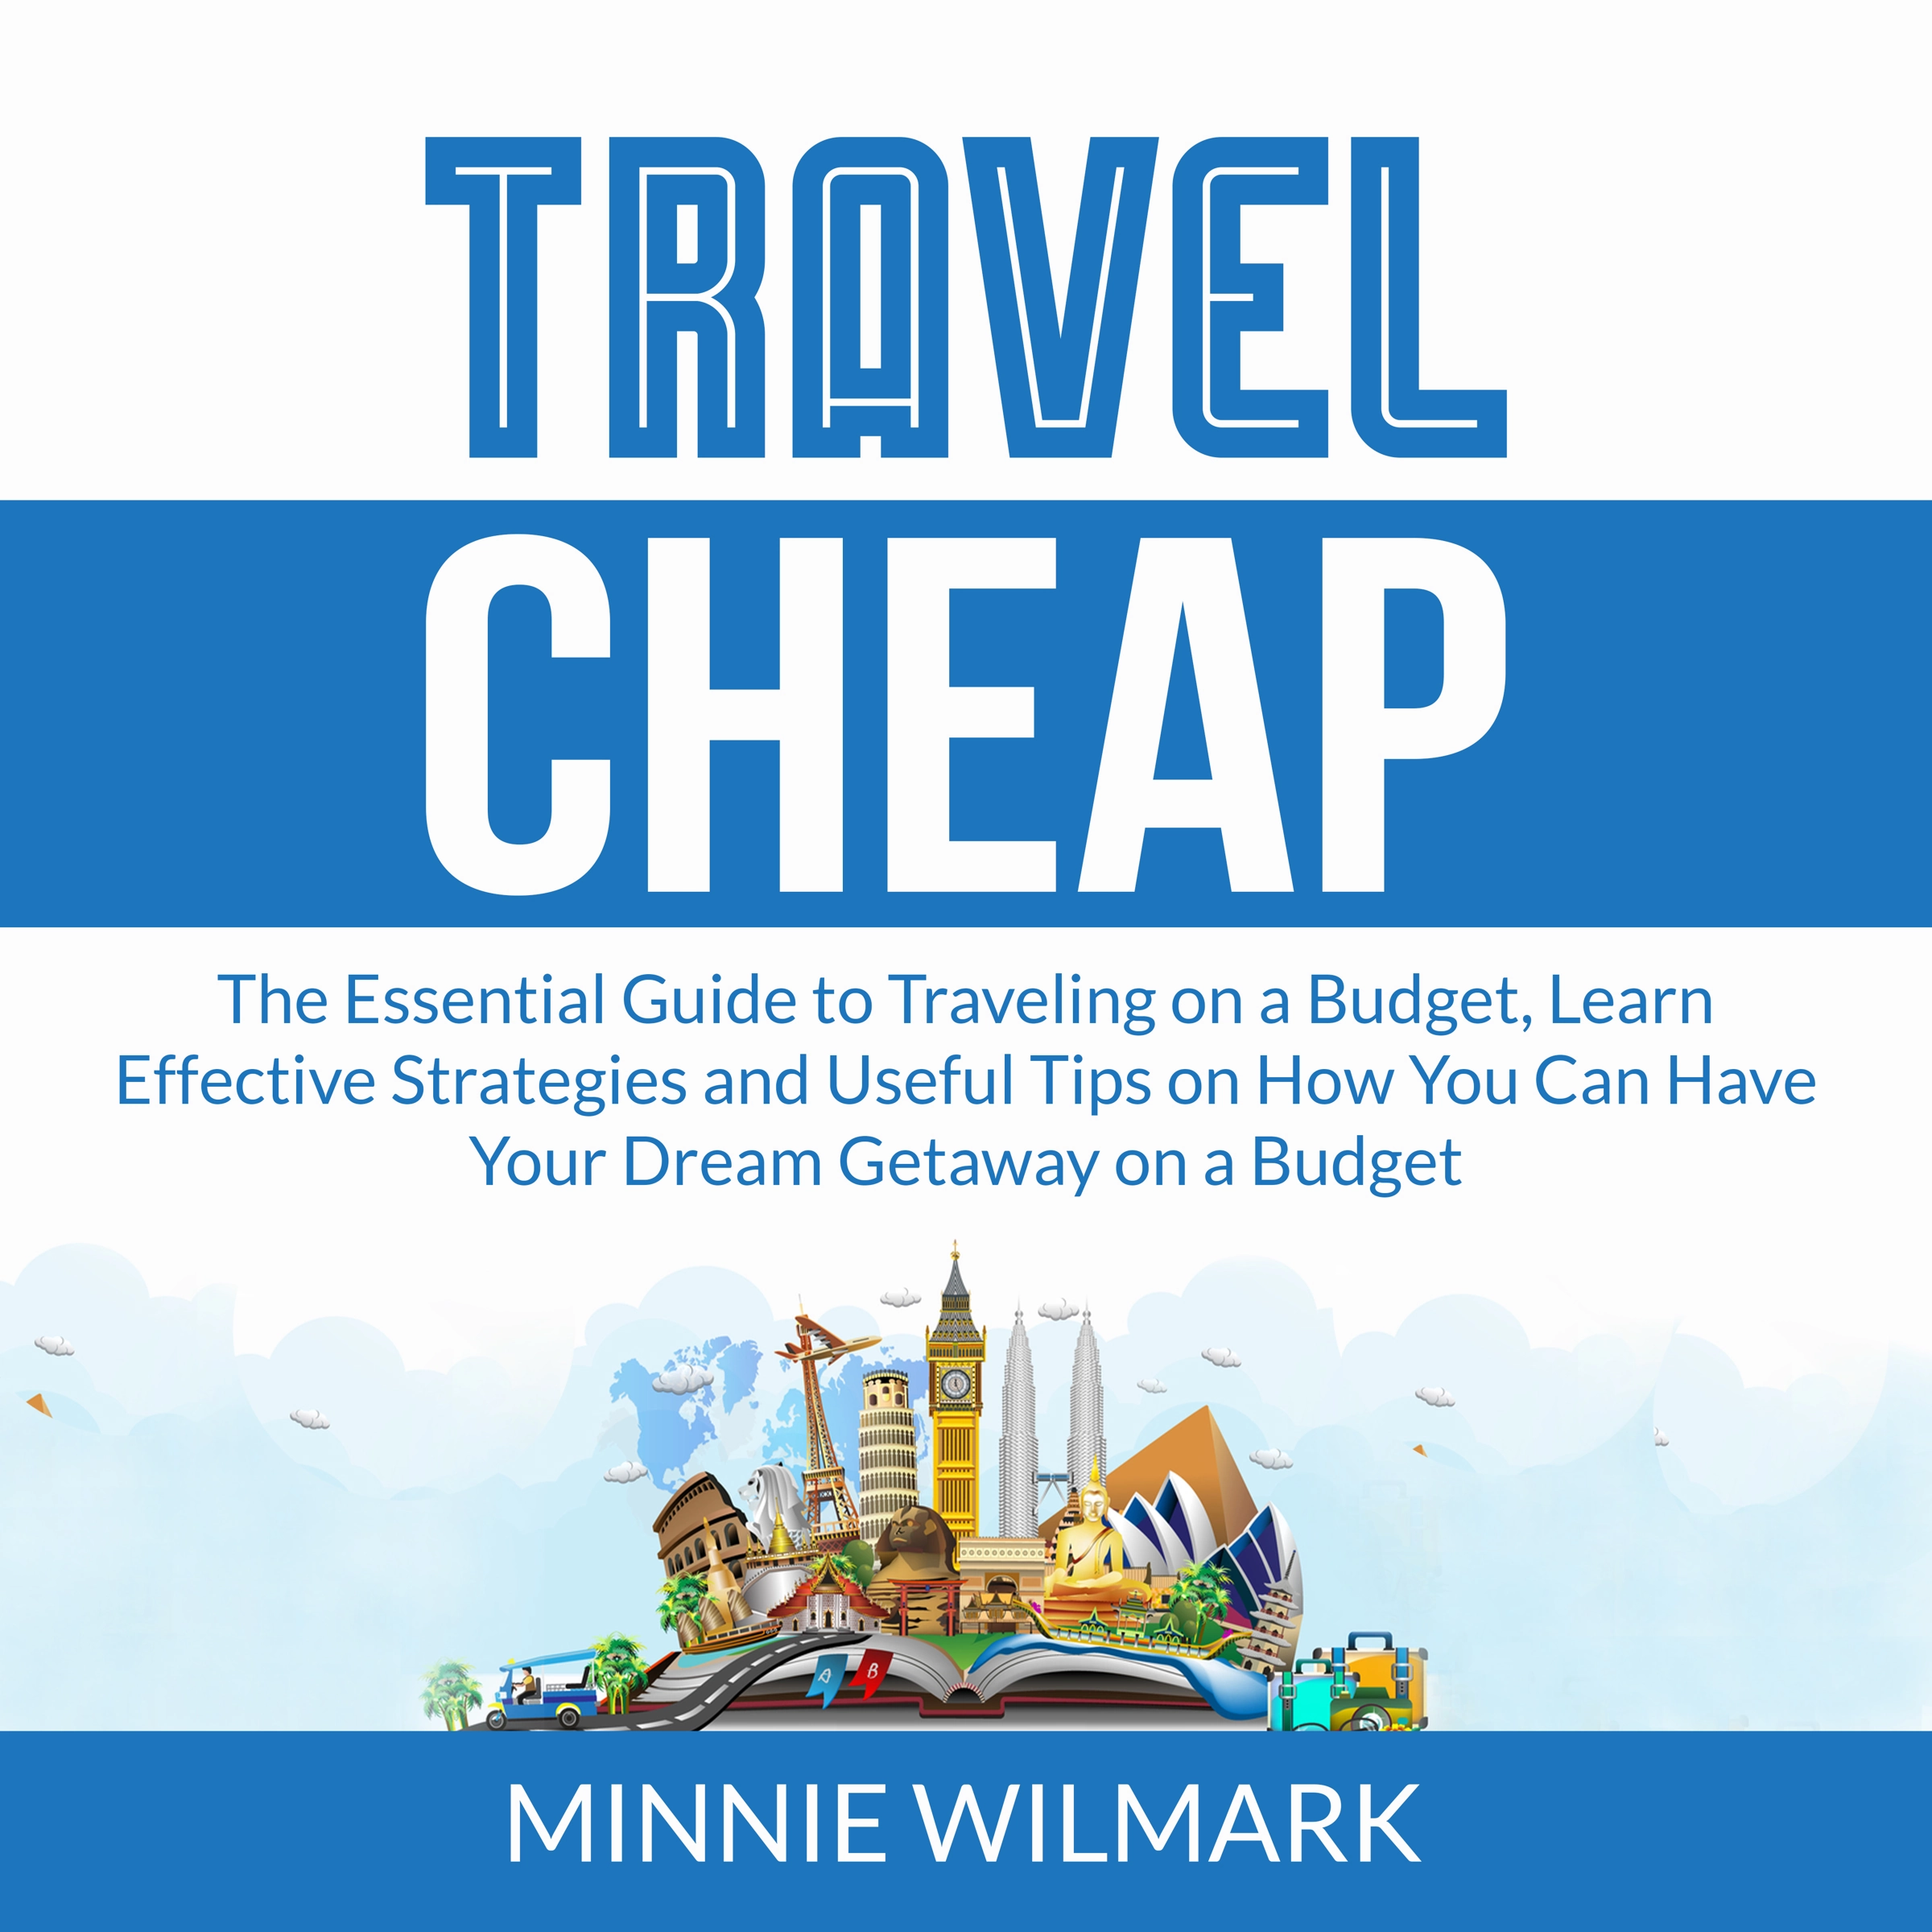 Travel Cheap by Minnie Wilmark Audiobook